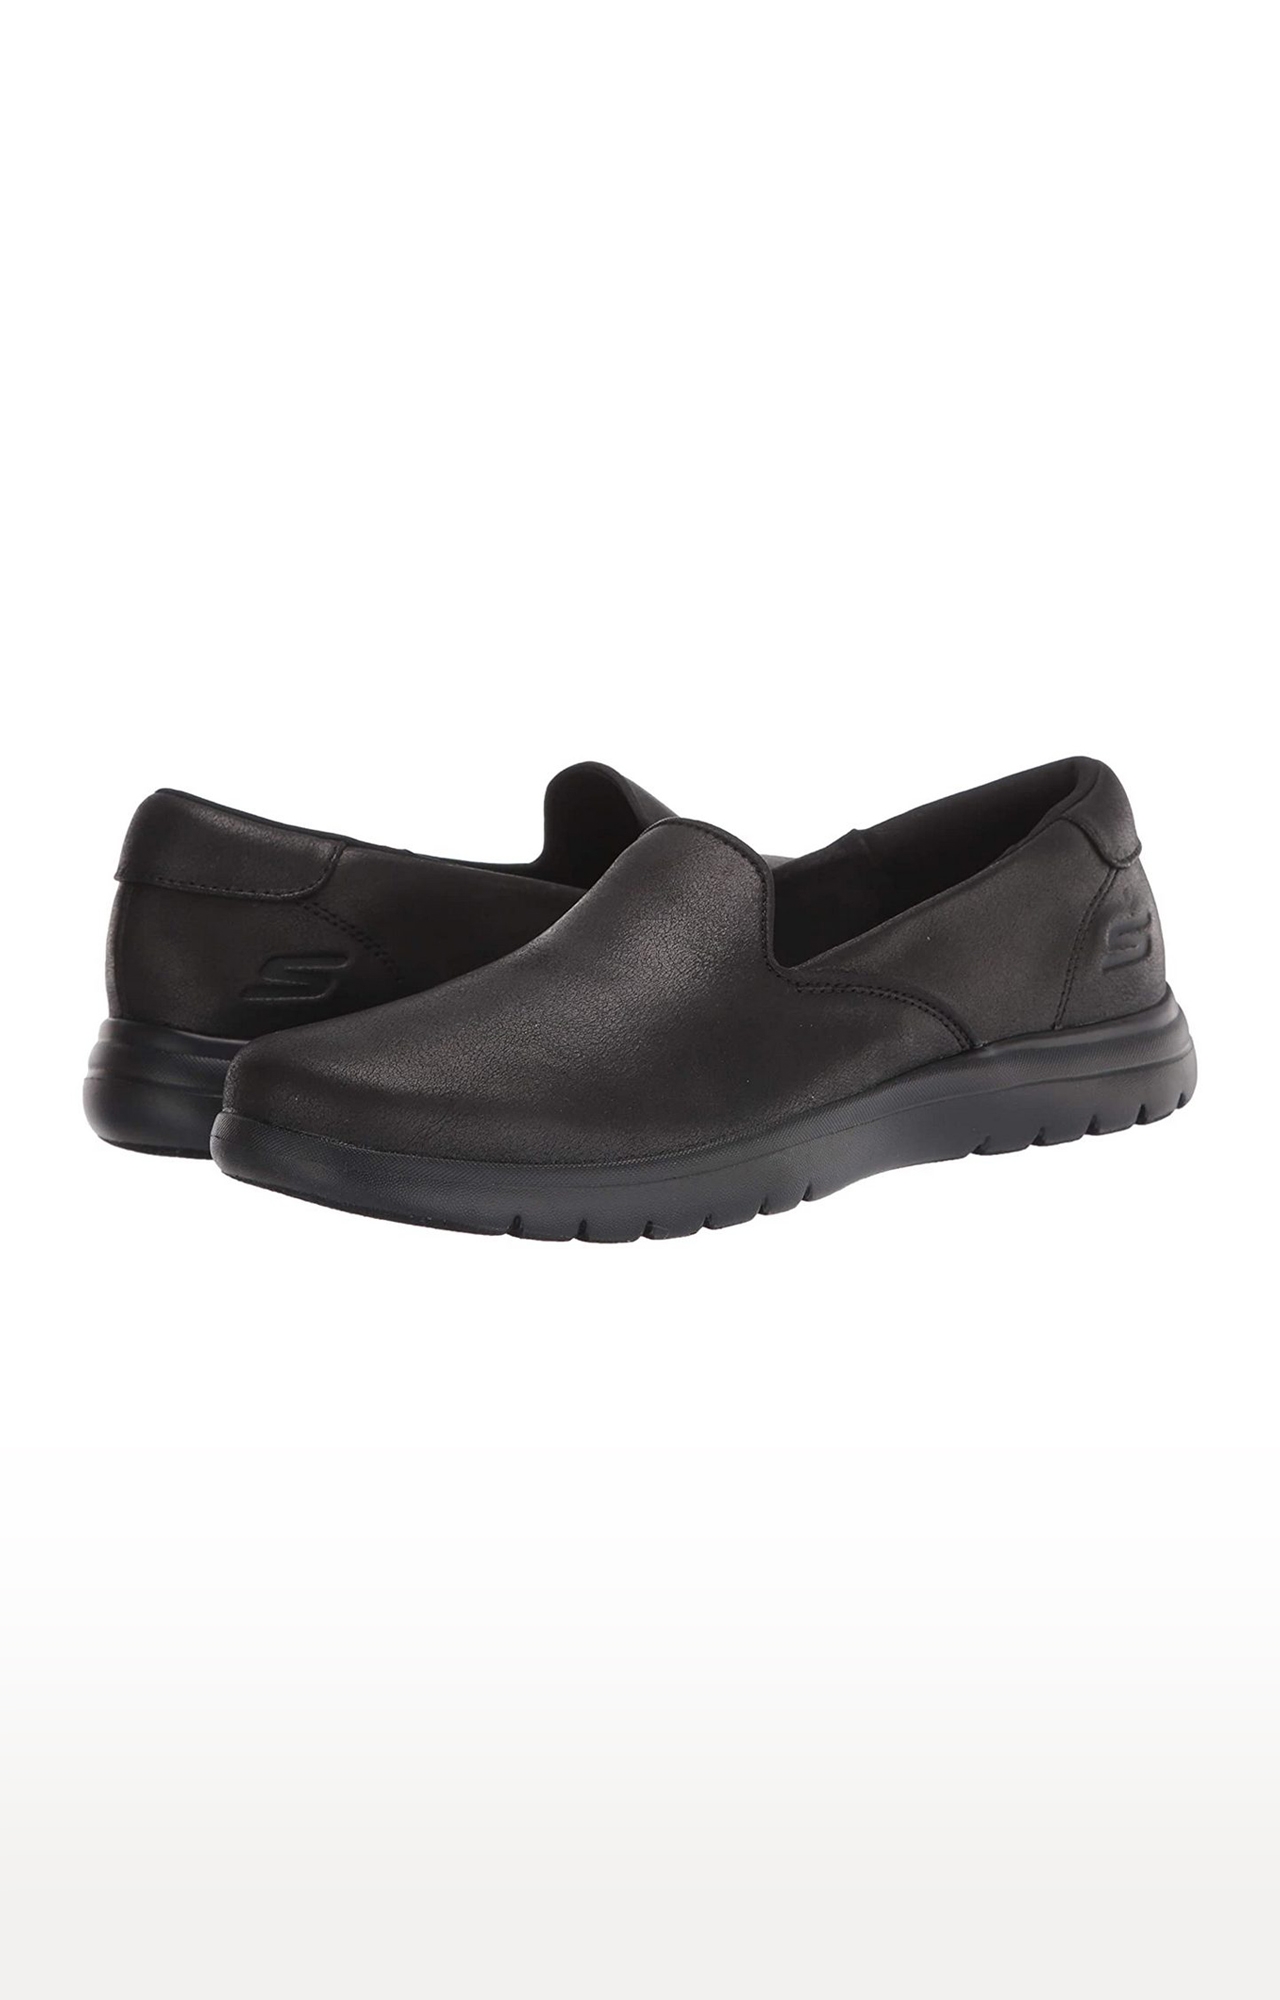 Skechers | Skechers womens ON-THE-GO FLEX LAVISH BLACK Walking Shoes - (136414-BBK) 6